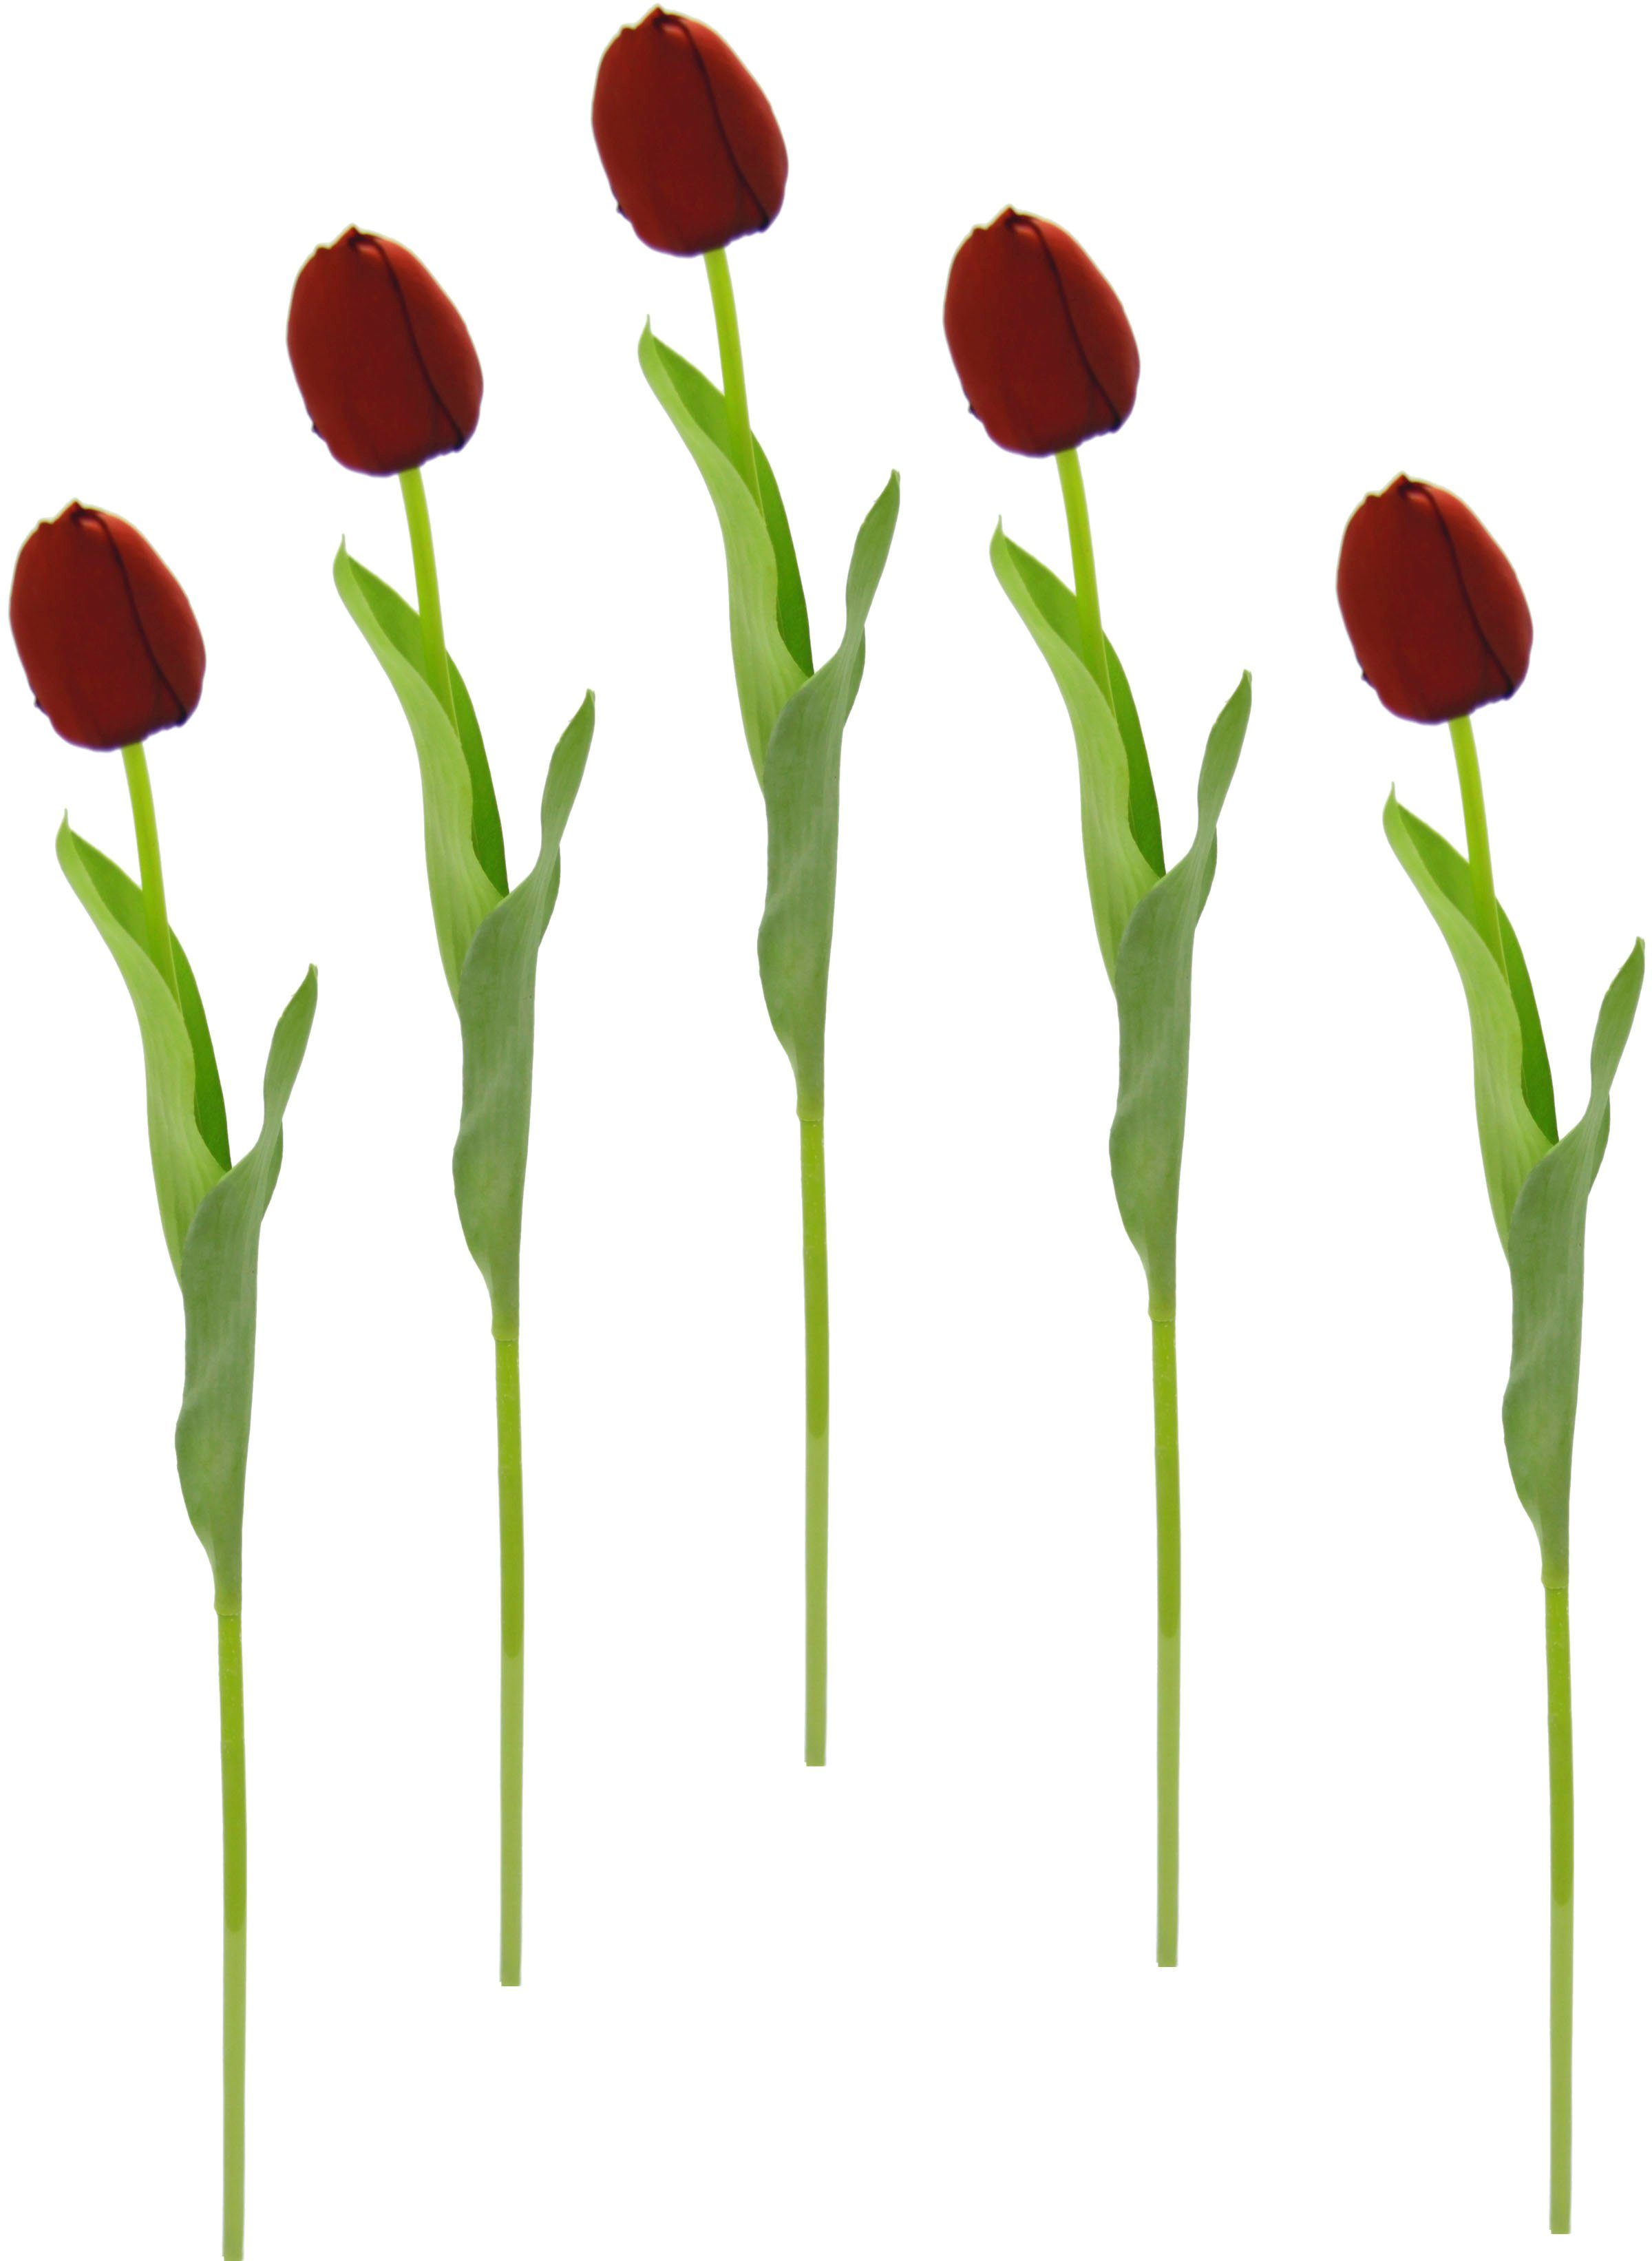 Kunstblume künstliche Set 67 Tulpenknospen, Touch Tulpen, dunkelrosa cm, Kunstblumen, I.GE.A., 5er Real Höhe Stielblume